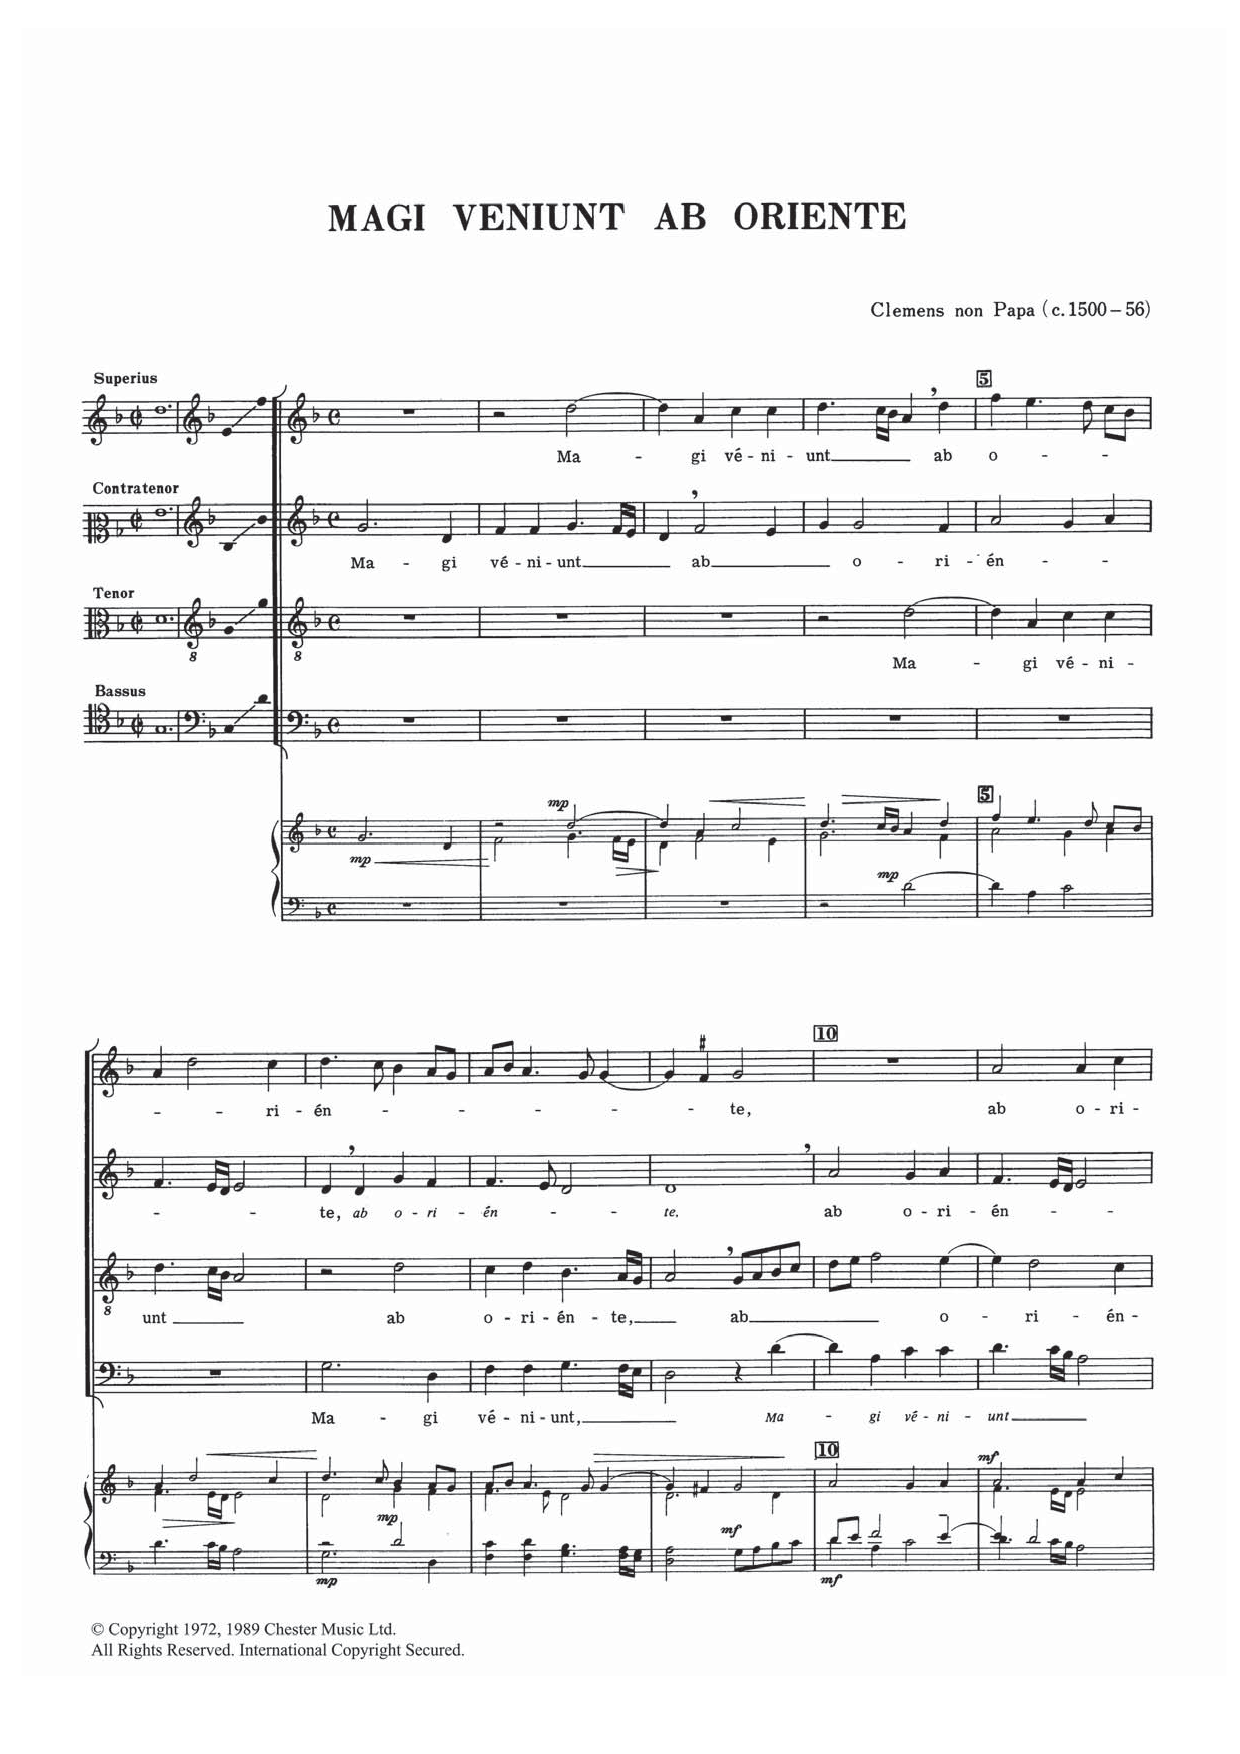 Magi Veniunt Ab Oriente (SATB Choir) von Jacob Clemens Non Papa